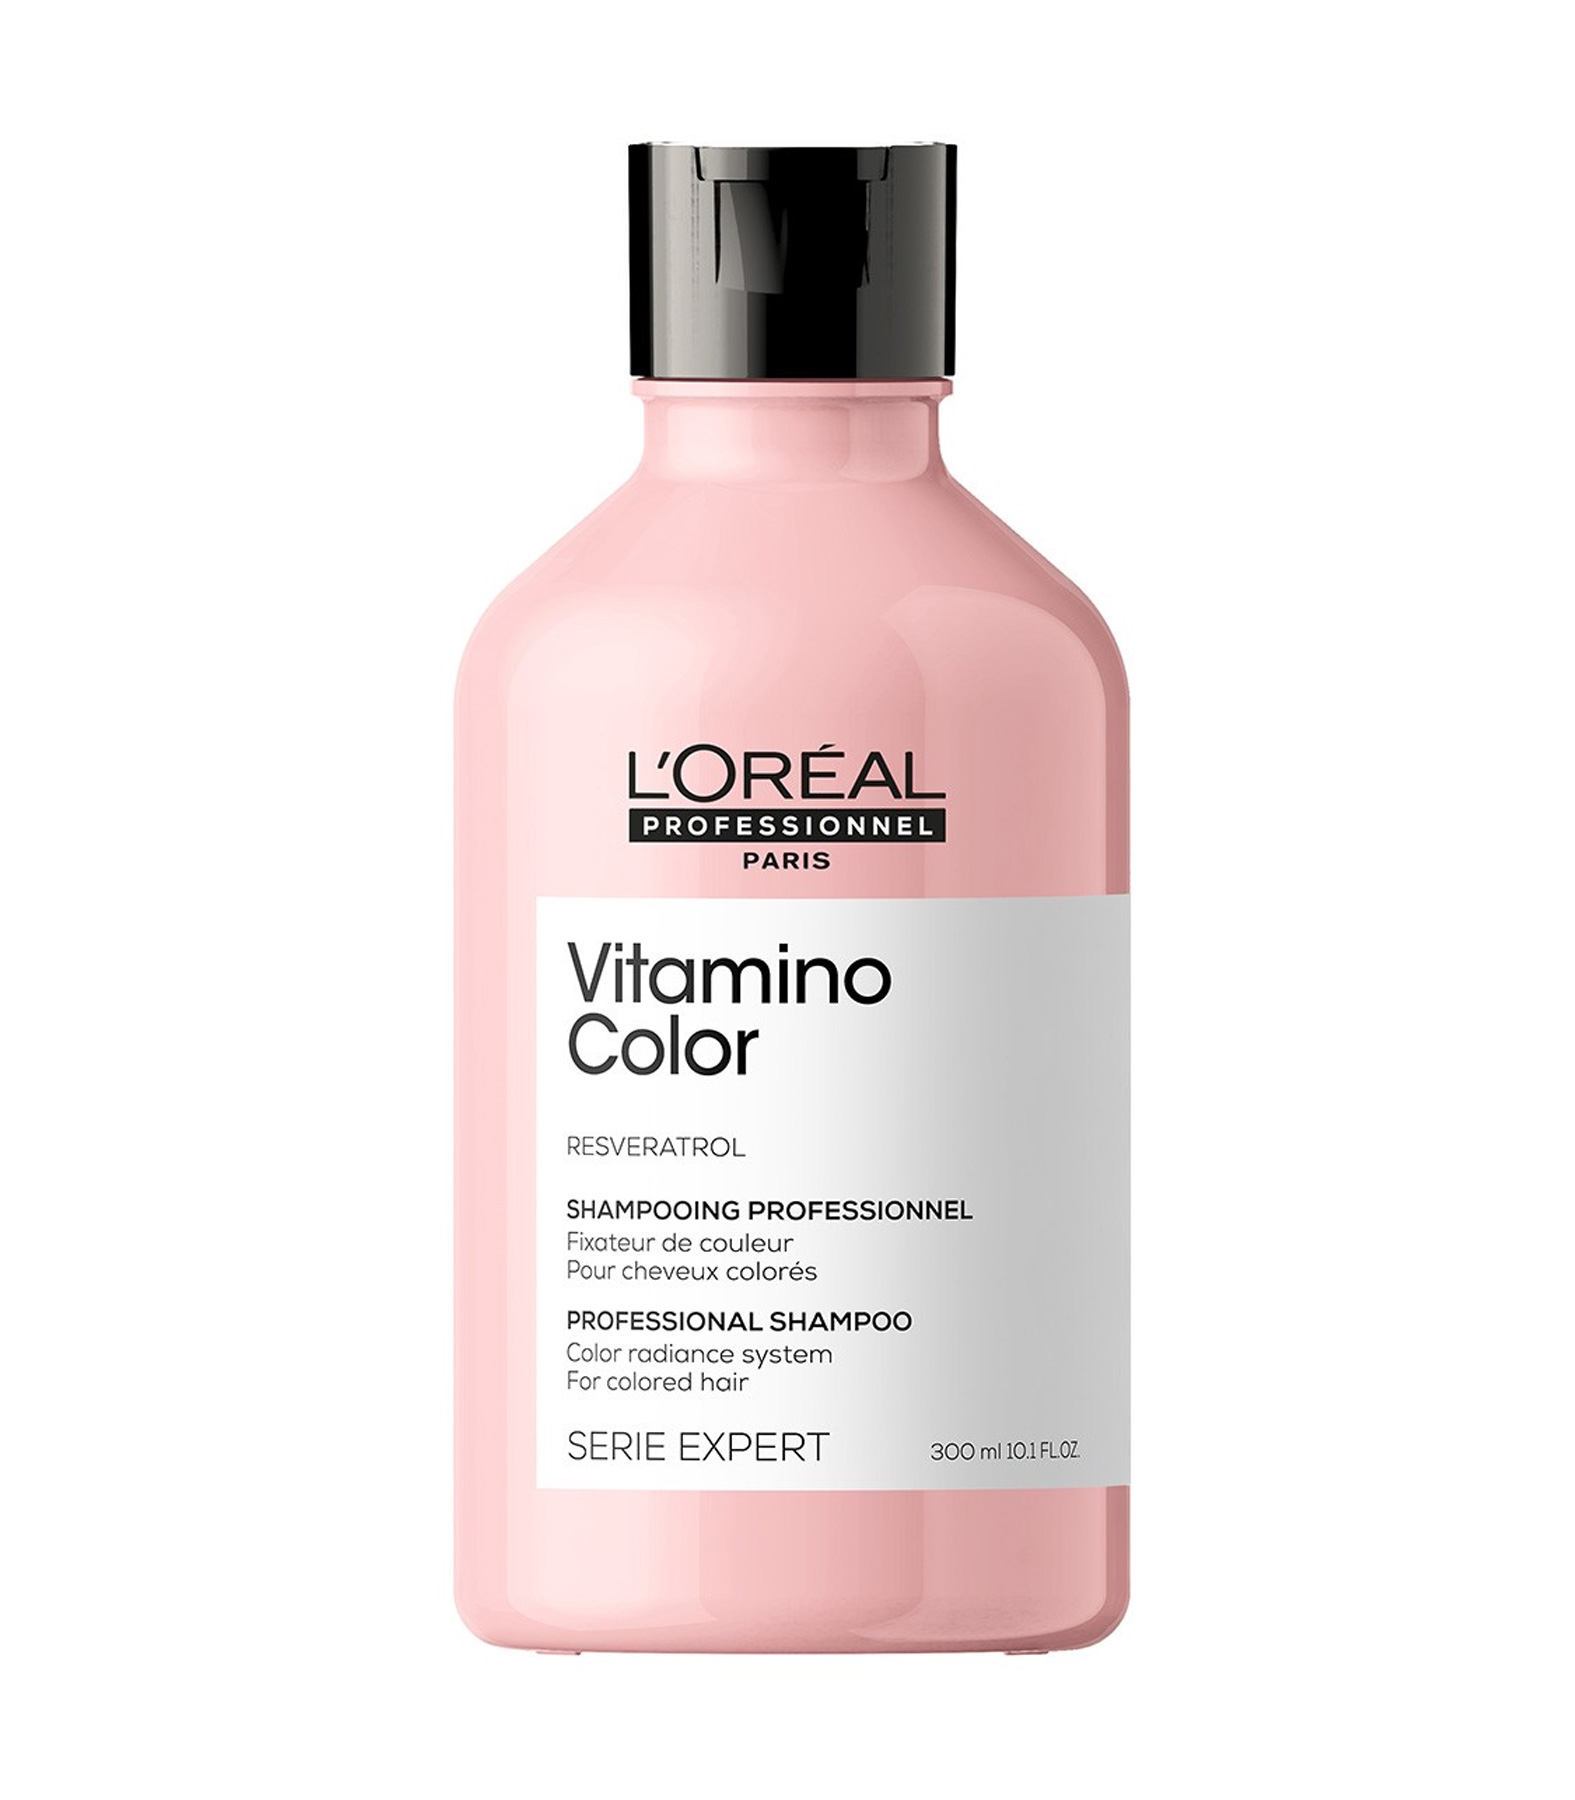 L’Oréal Vitamino Color Shampoo 300ml